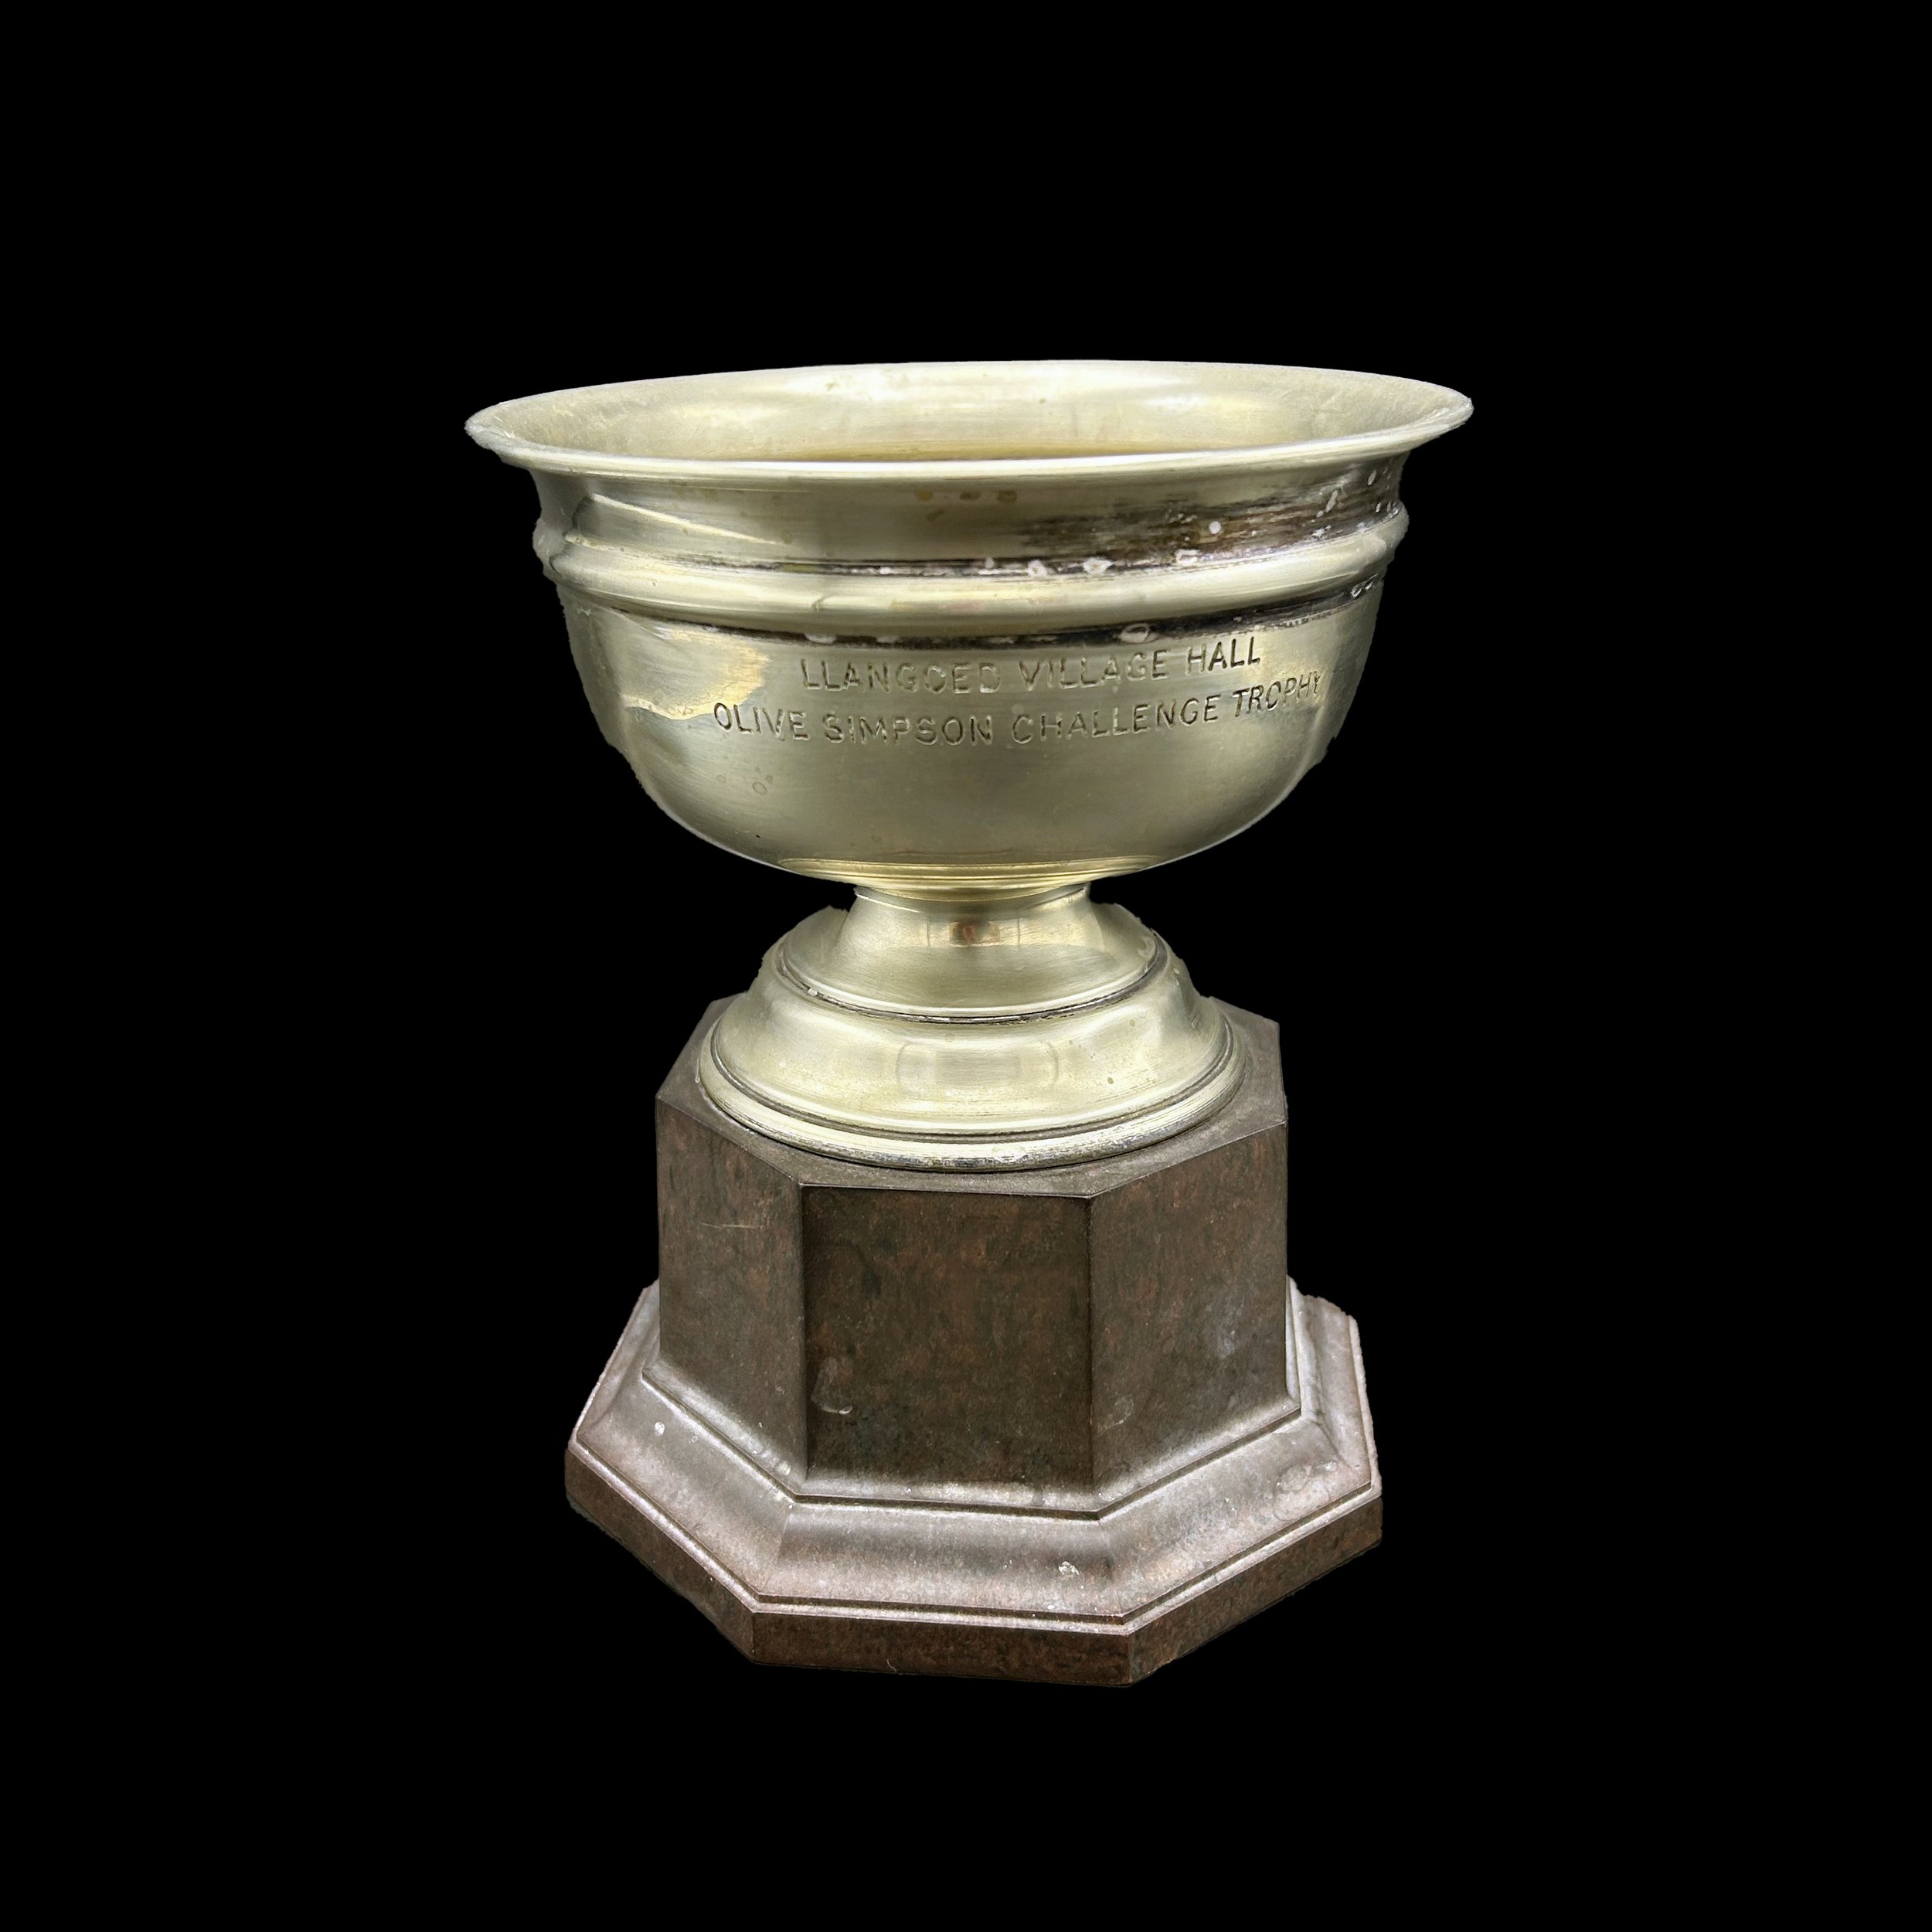 Llangoed Village Hall Olive Simpson Challenge Trophy